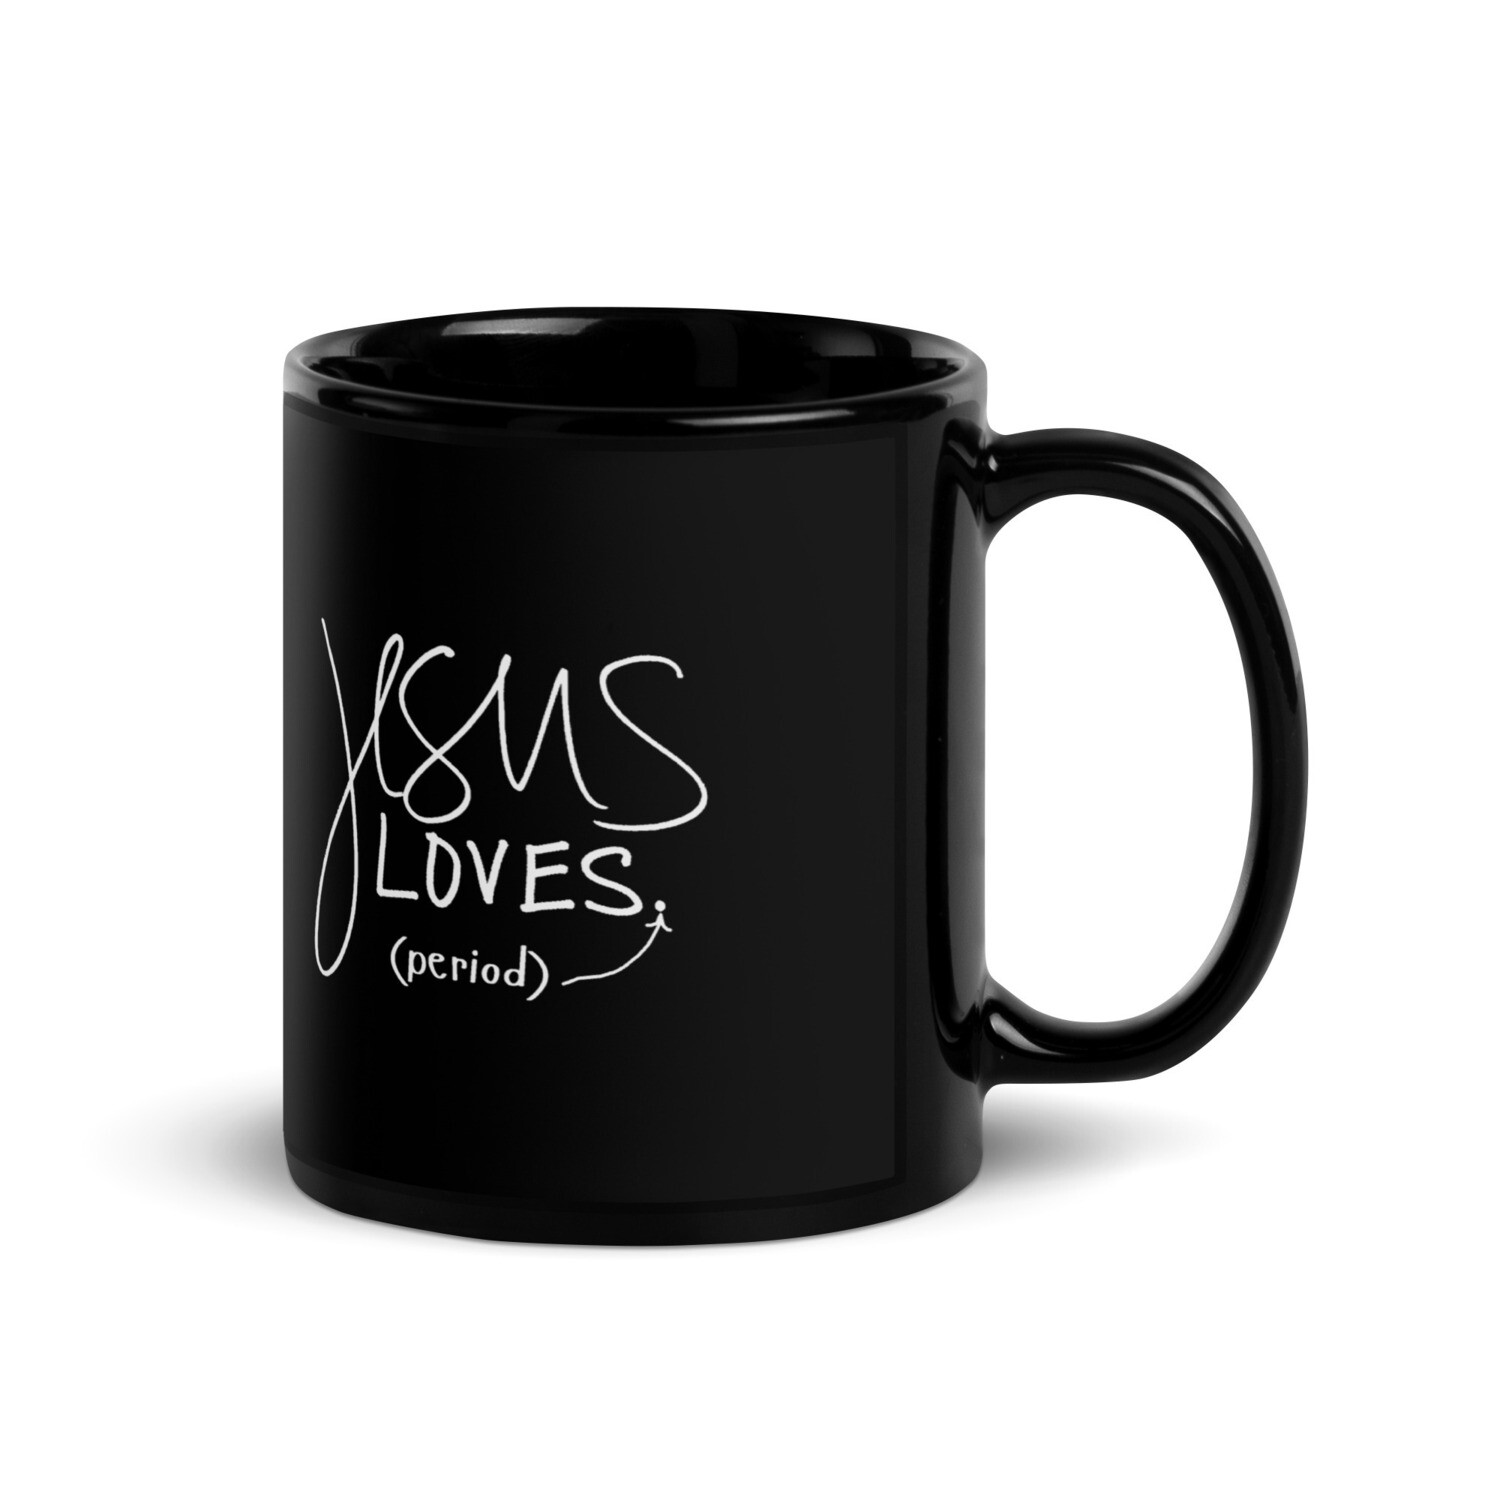 Jesus Loves Mug for coffee, tea, hot chocolate and more